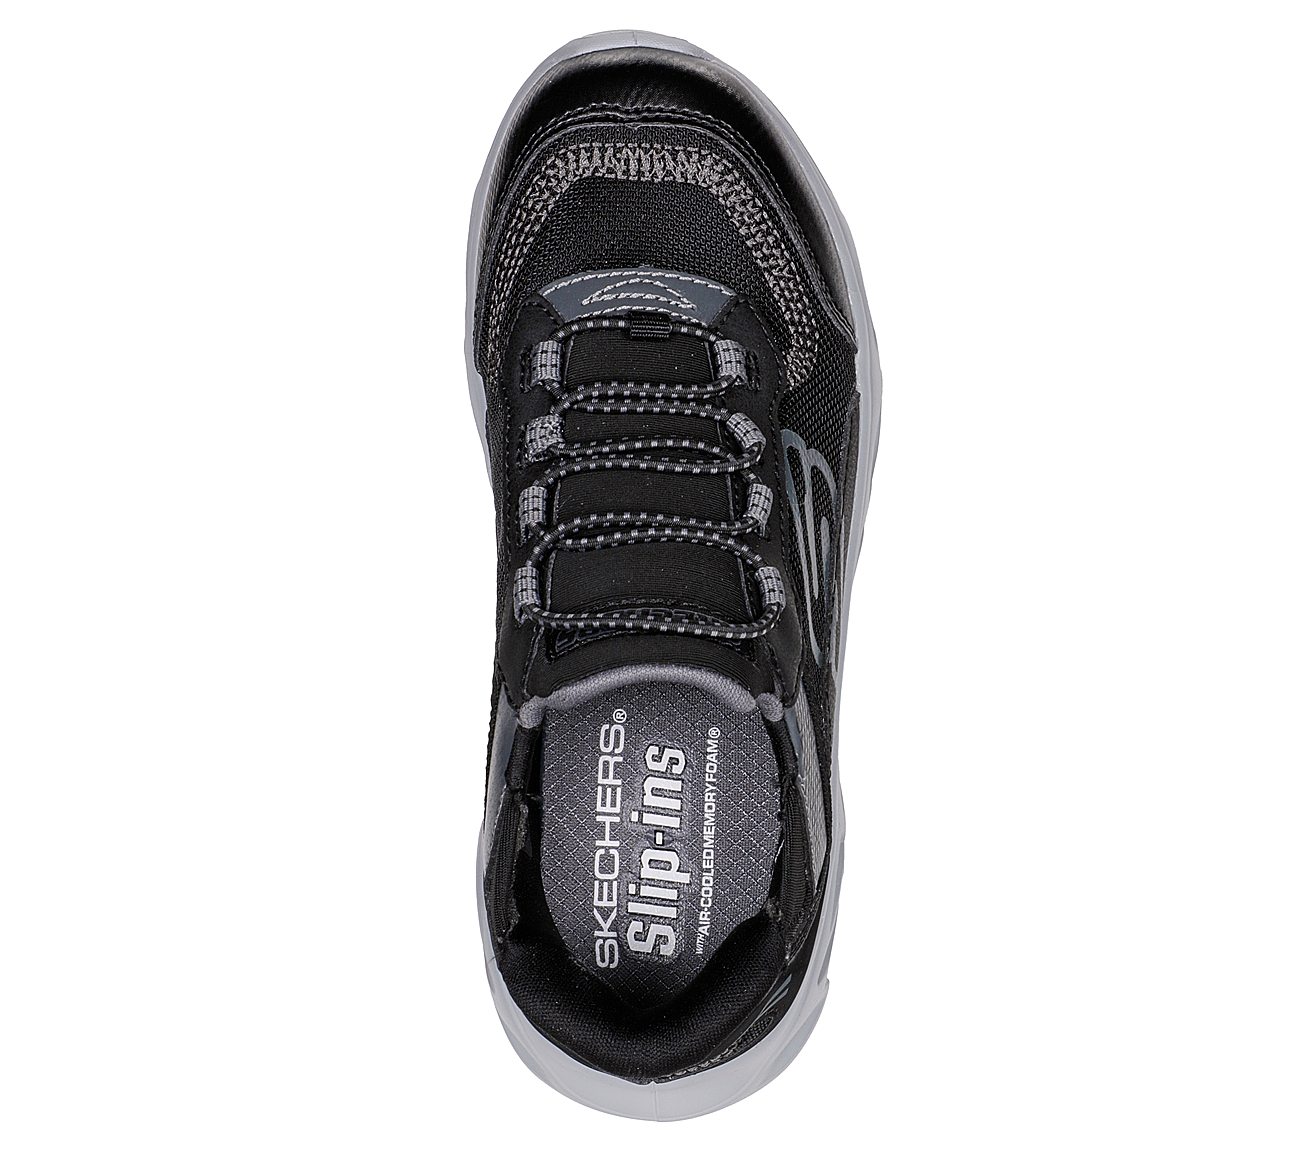 FLEX GLIDE, BLACK/CHARCOAL Footwear Top View